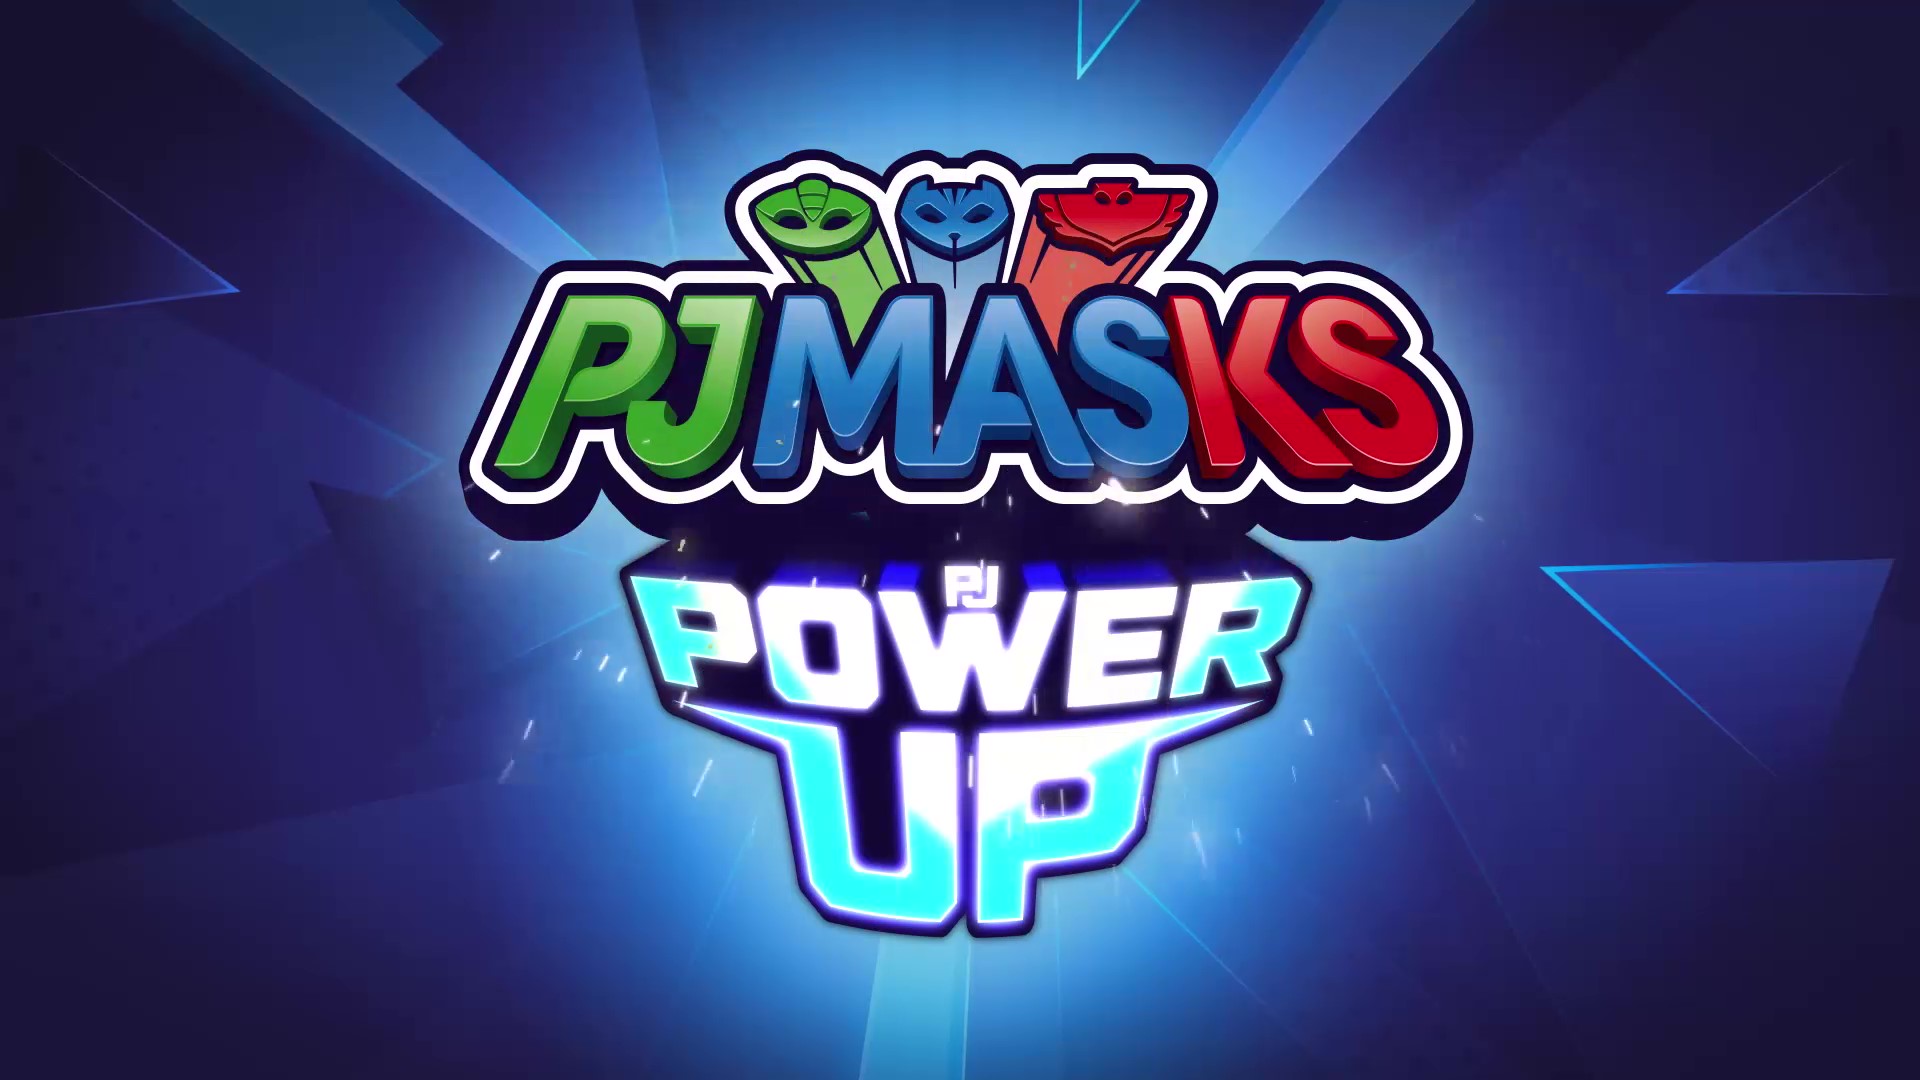 PJ Masks Official Site. Home. News, Events, Show Information & More